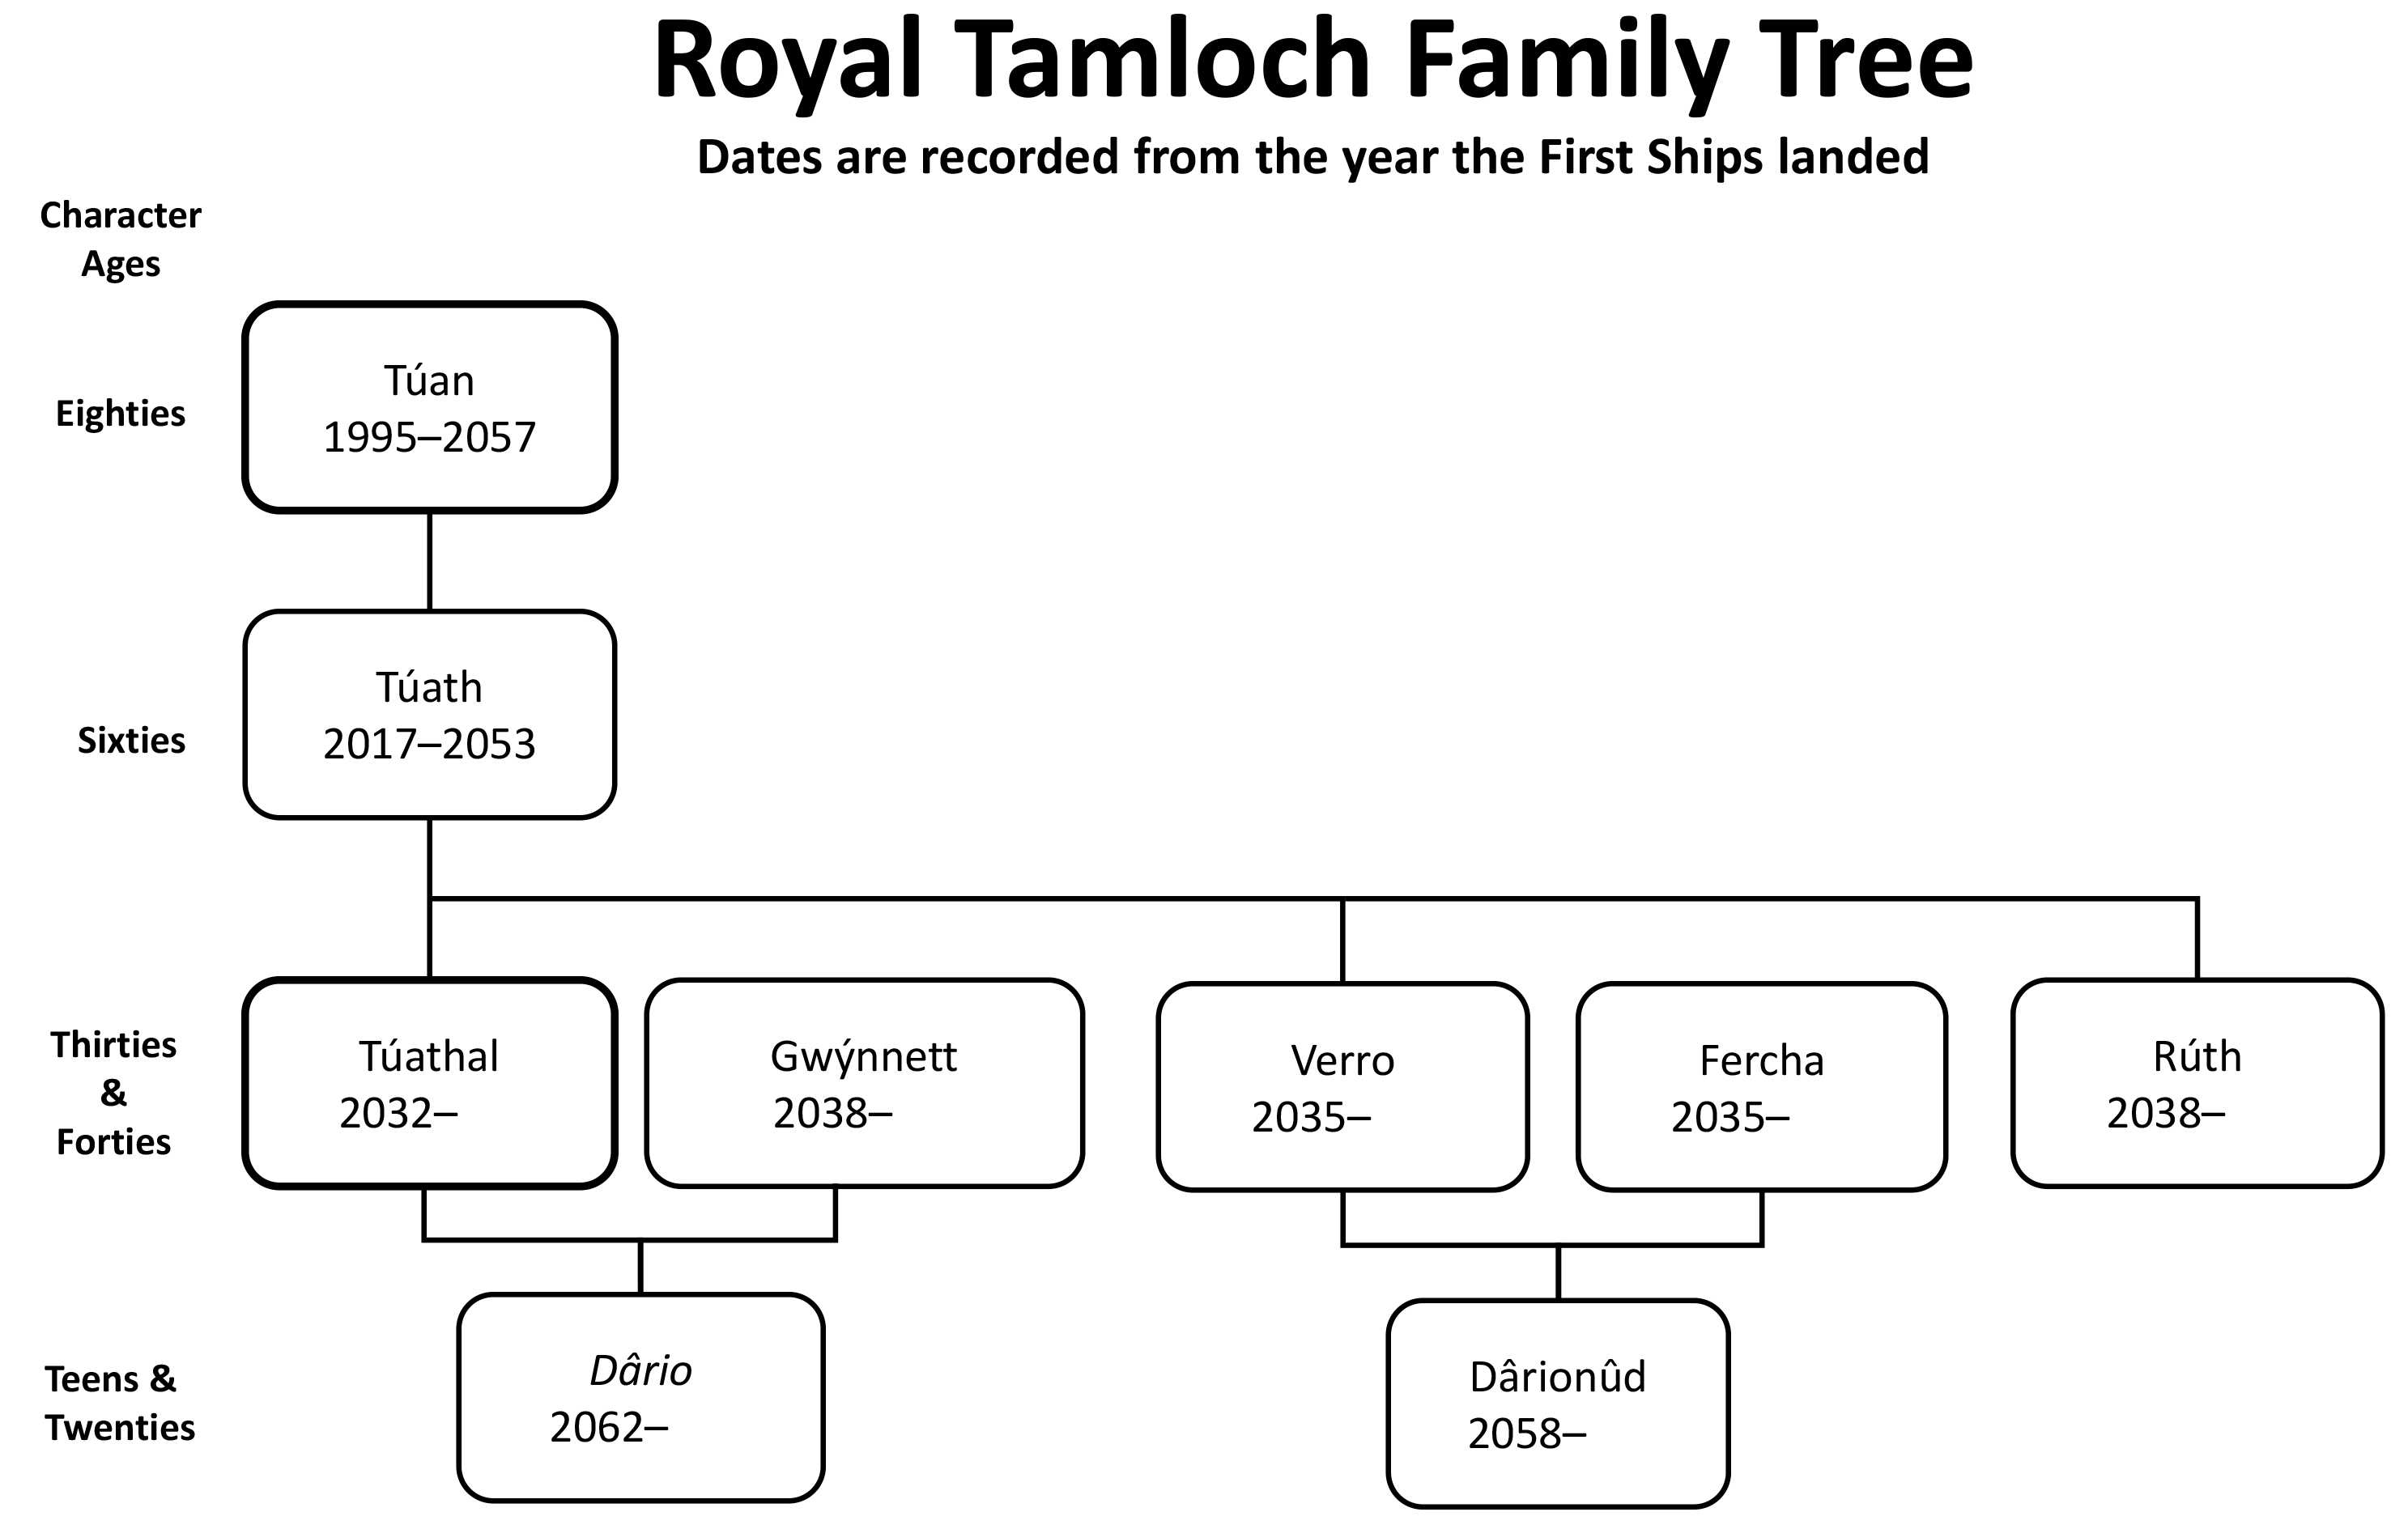 Royal Tamloch Family Tree